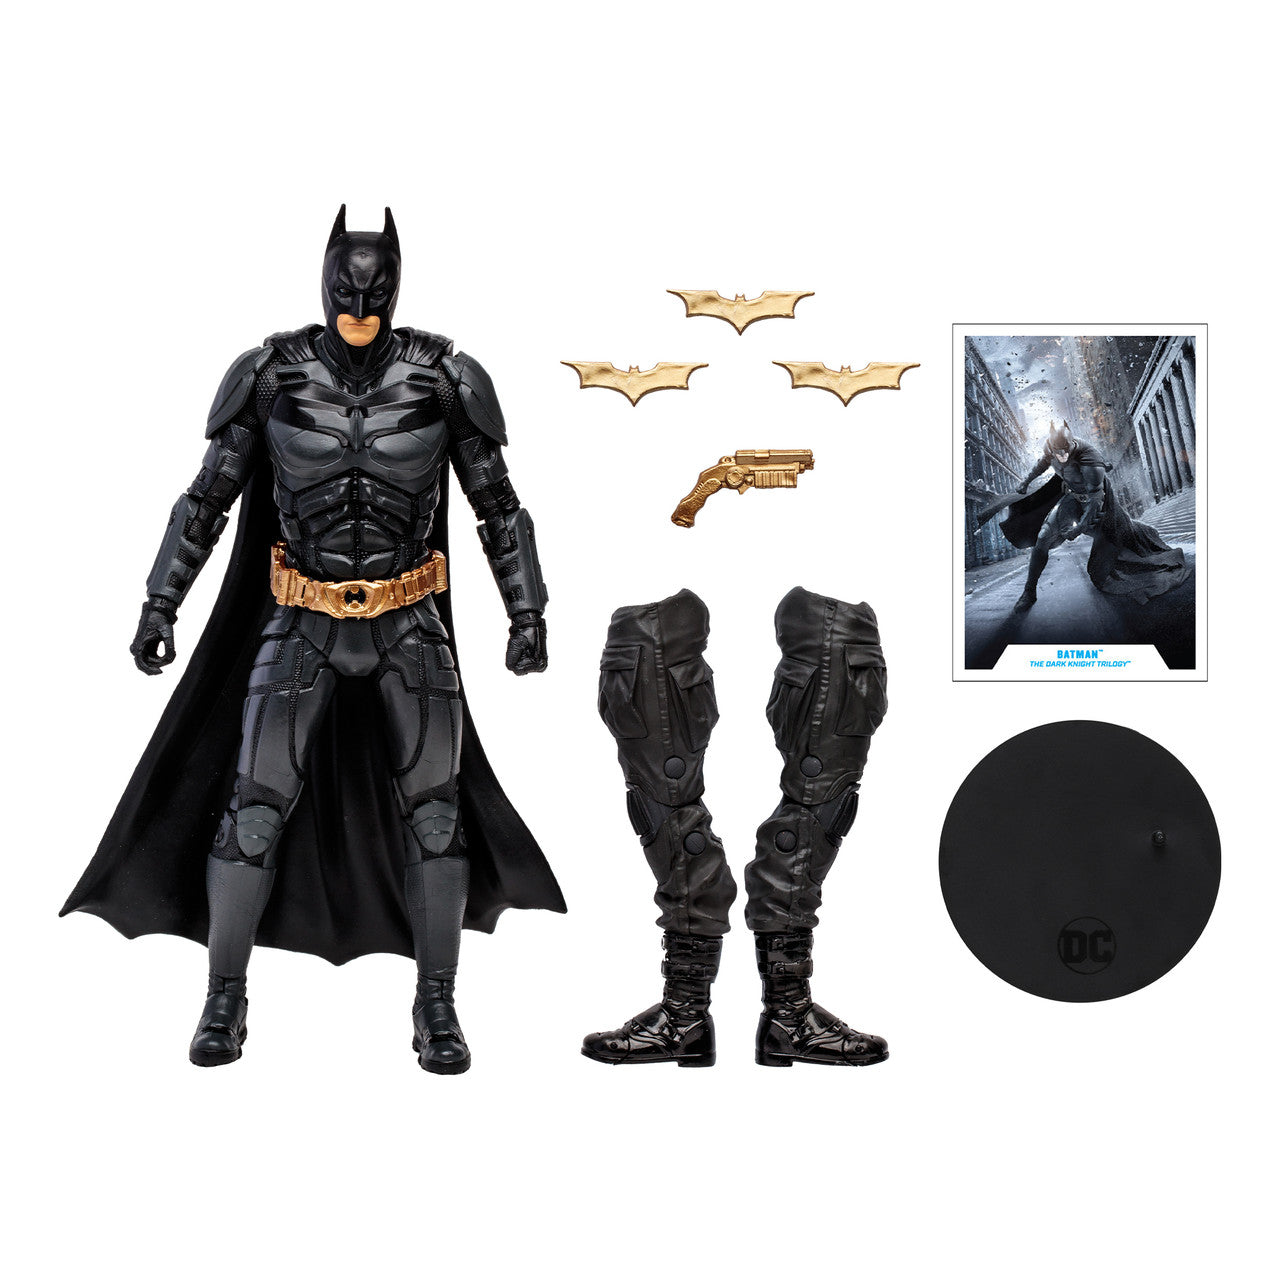 Batman (The Dark Knight Trilogy) 7" Build-A-Figure Series Bane Action Figure by McFarlane Toys -McFarlane Toys - India - www.superherotoystore.com